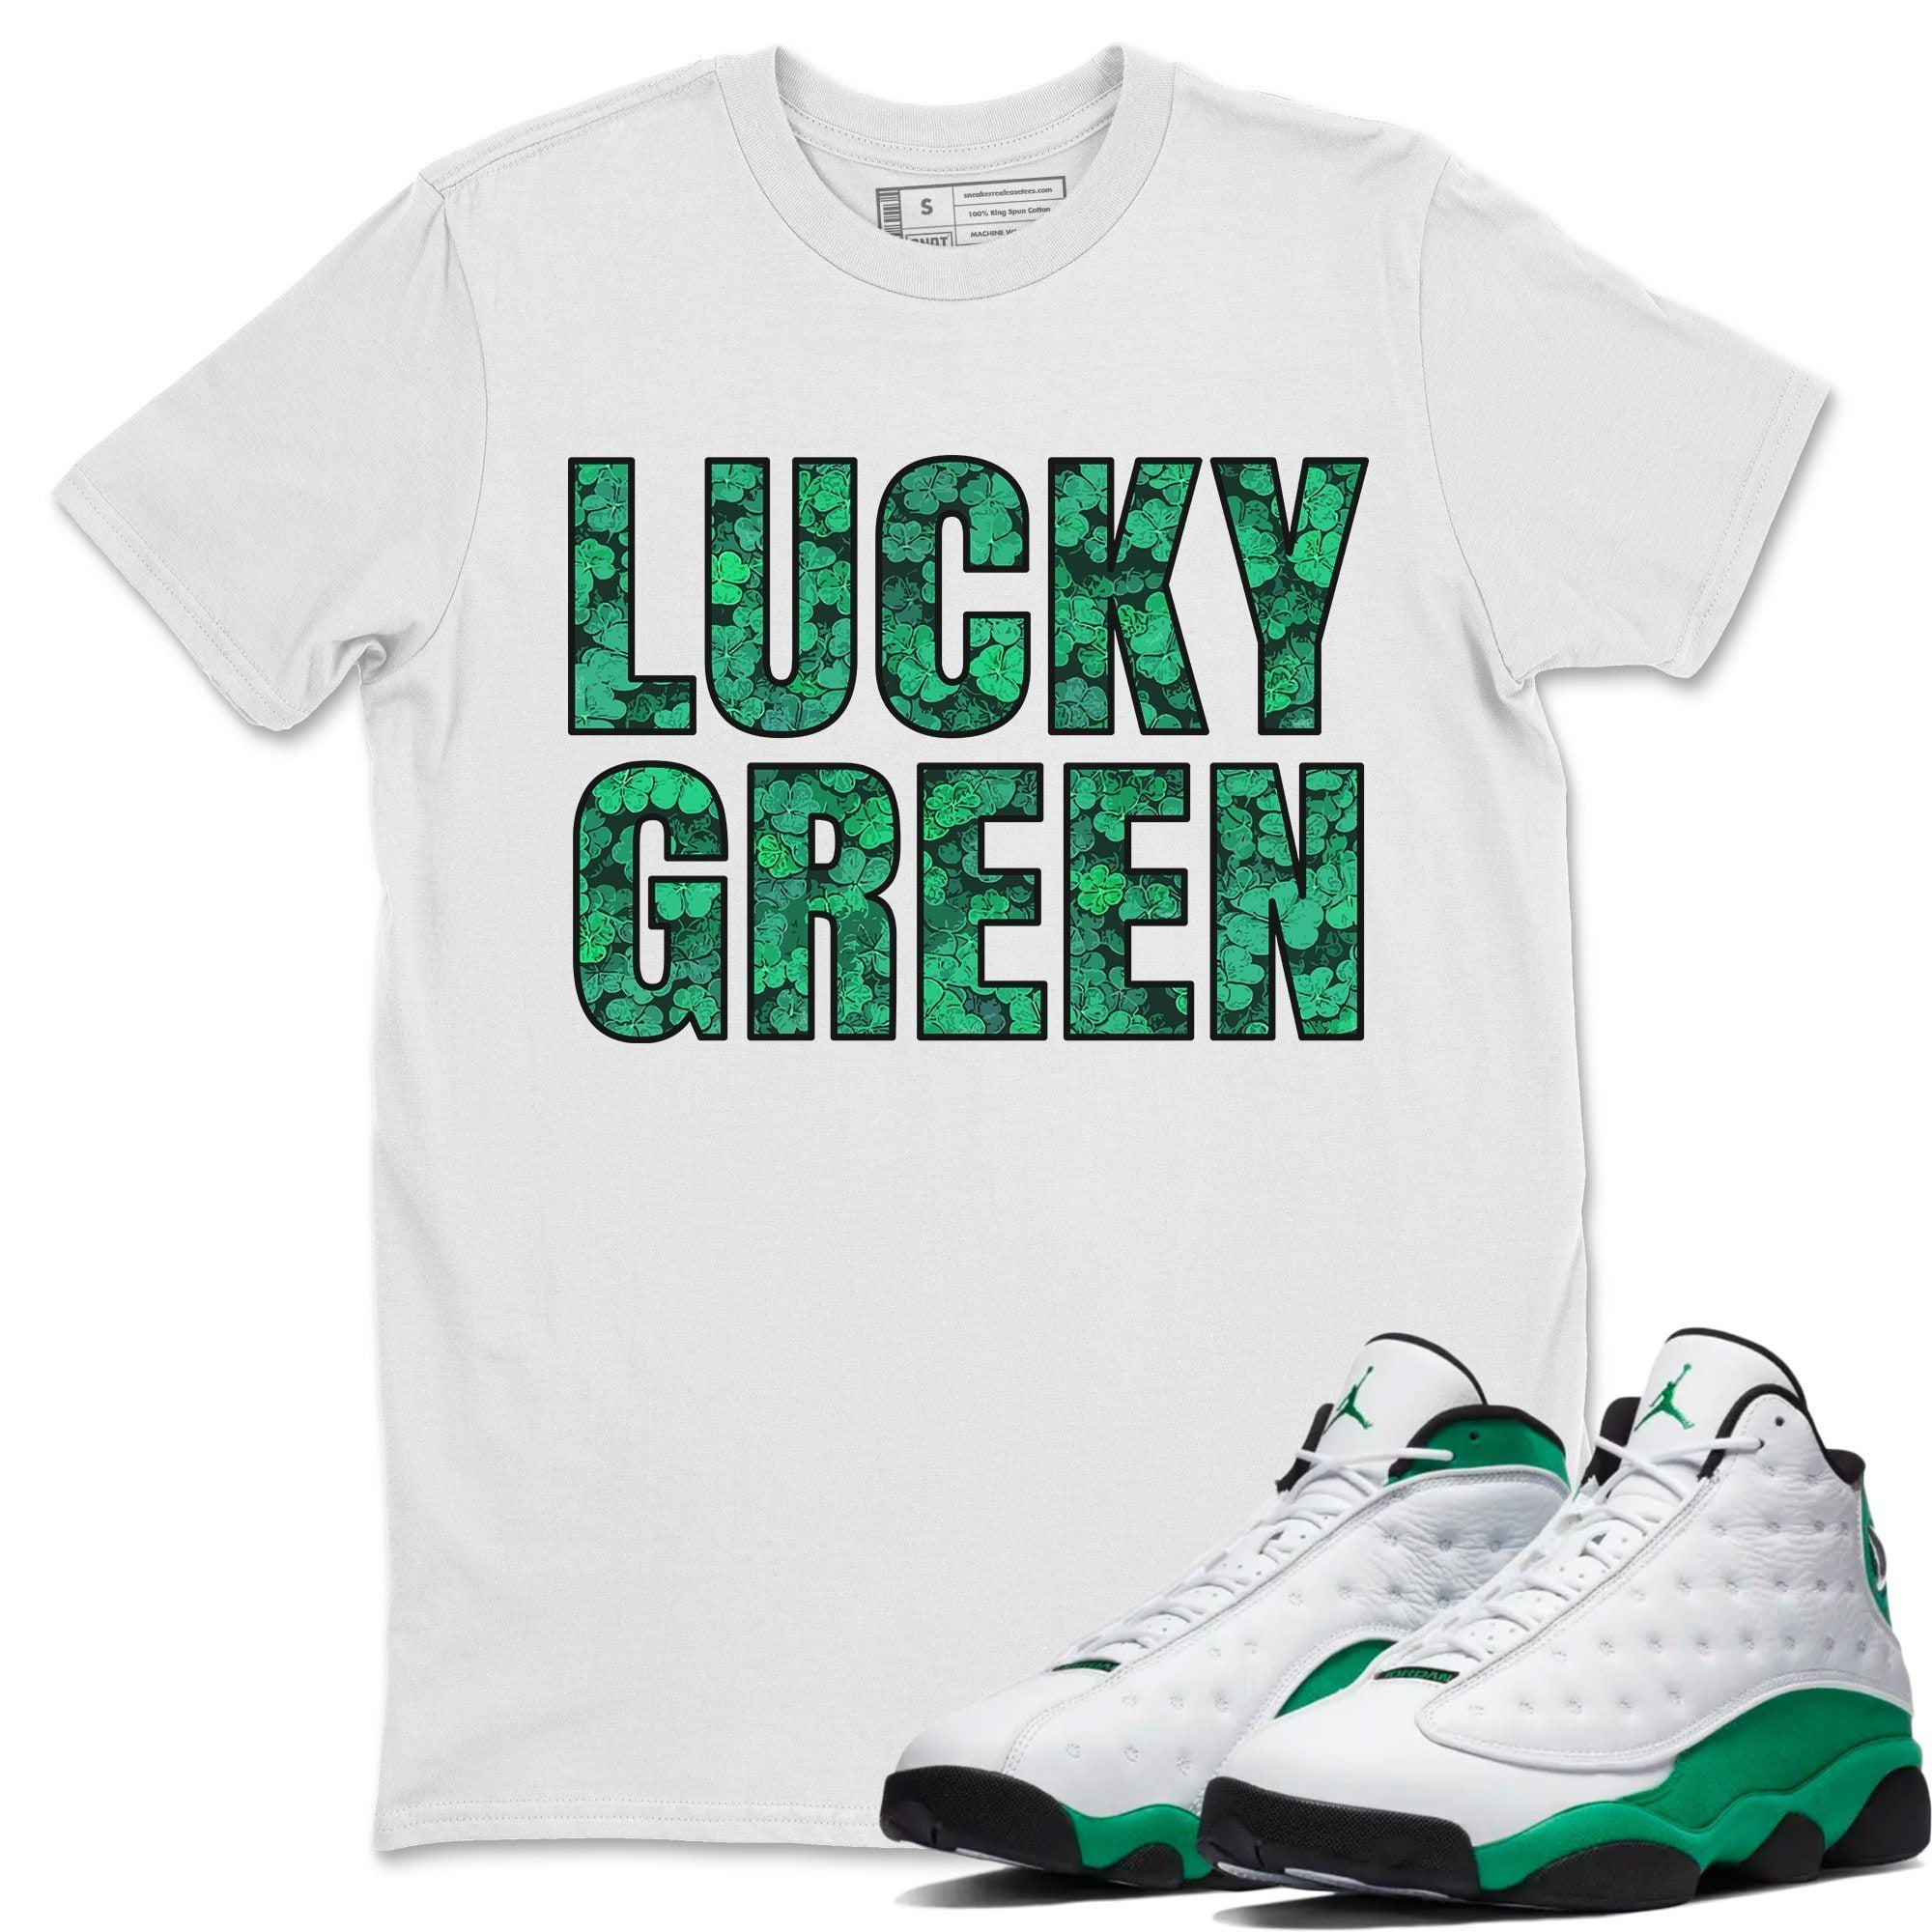 green jordan 13 shirt